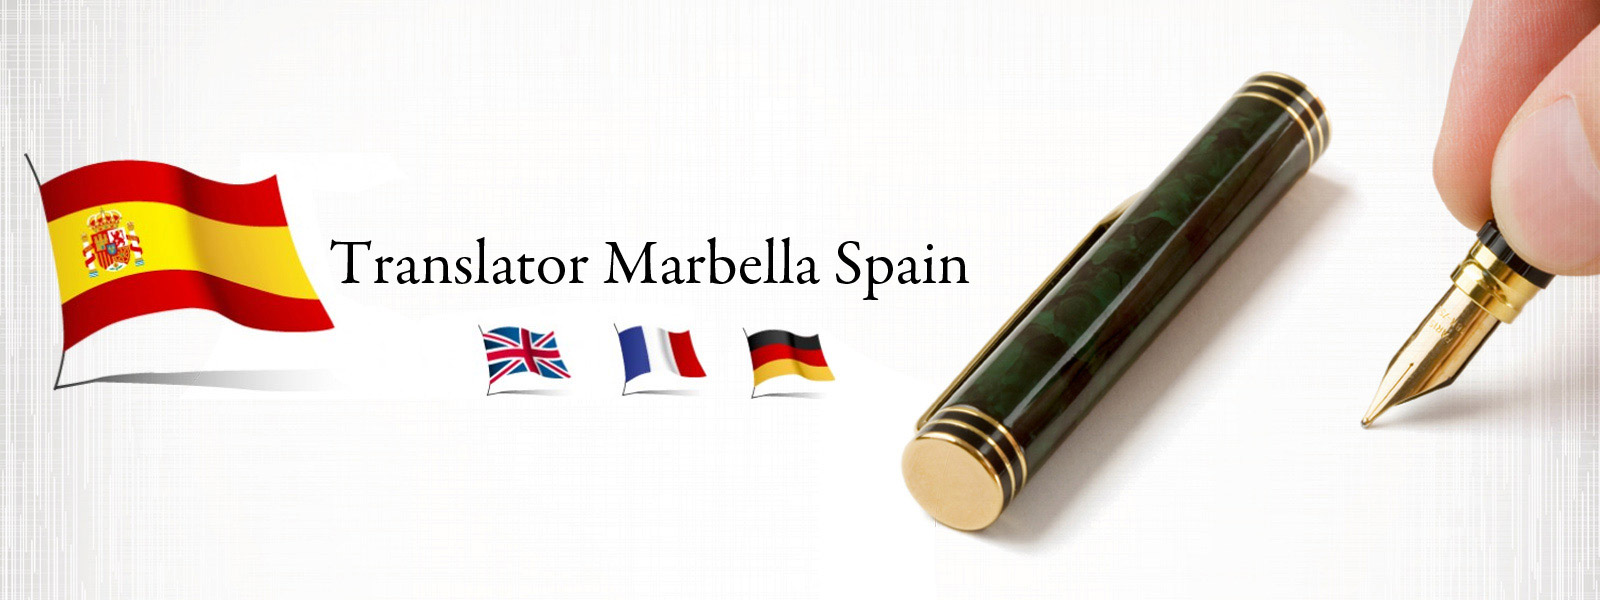 Translator Marbella Spain banner 1